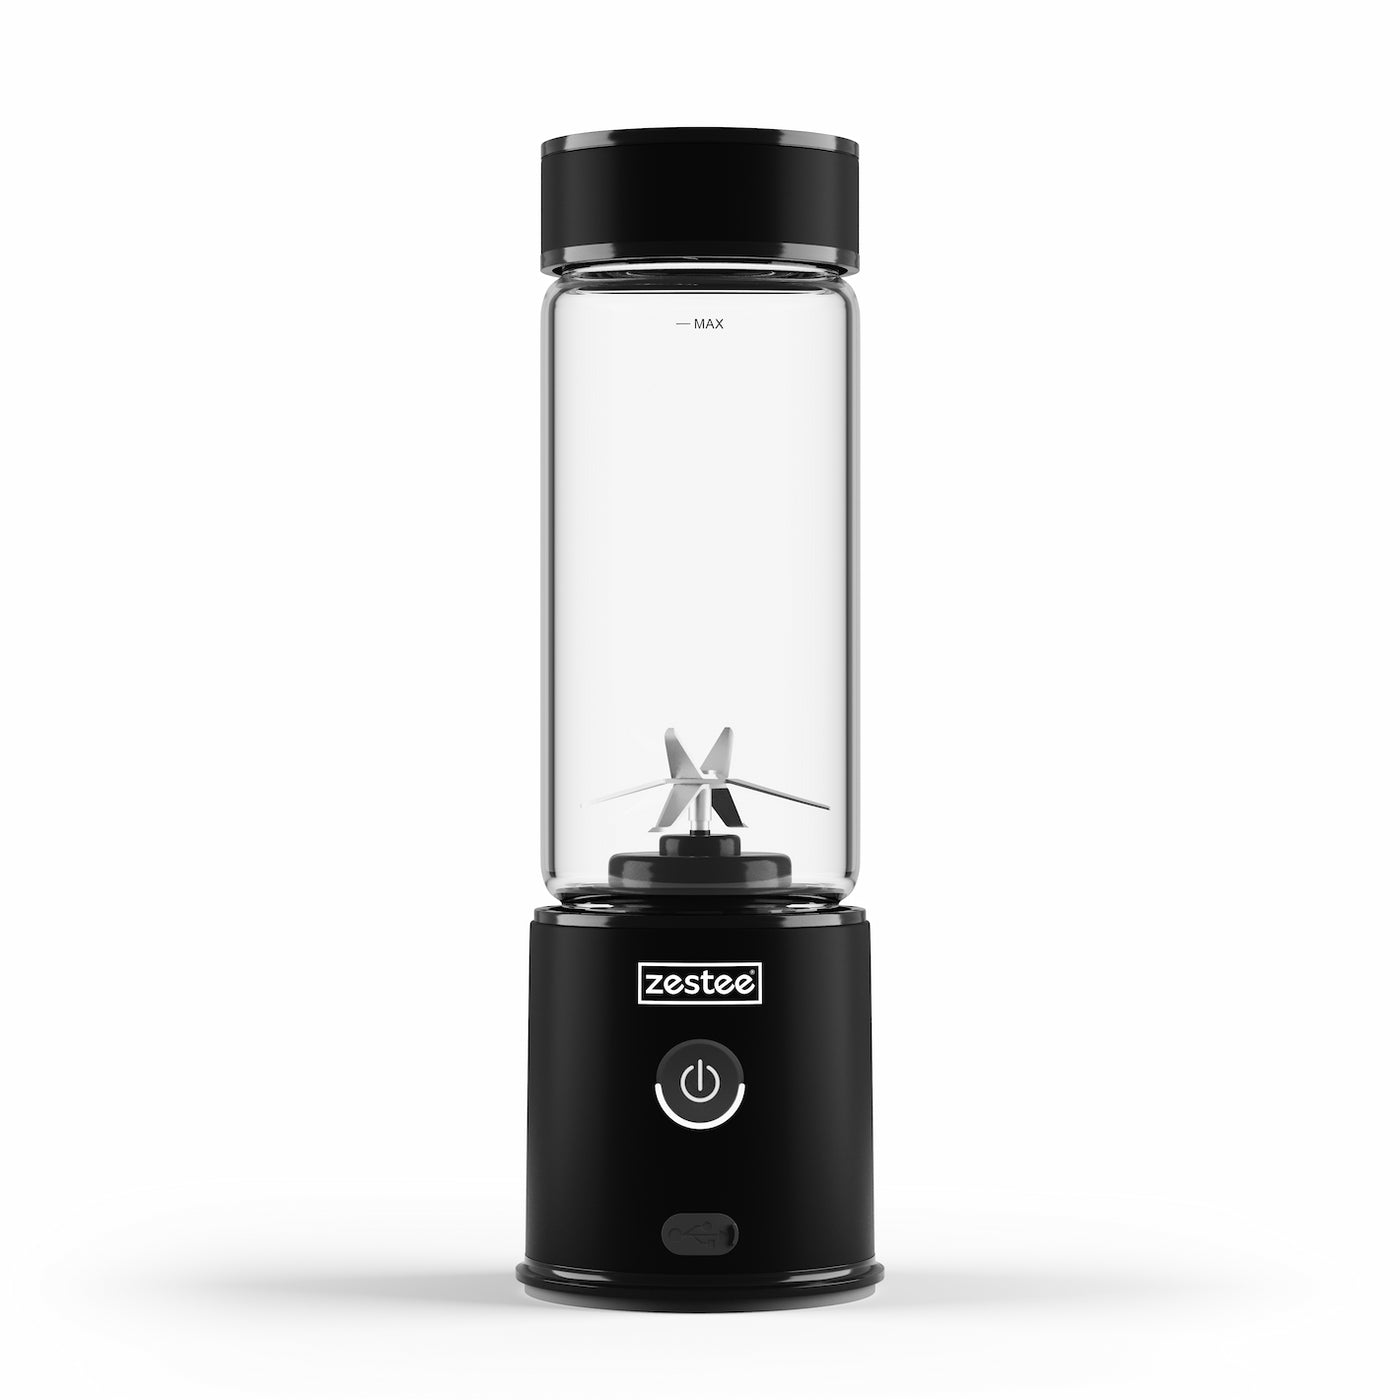 Zestee portable blender, black, USB rechargeable, 450ml glass cup